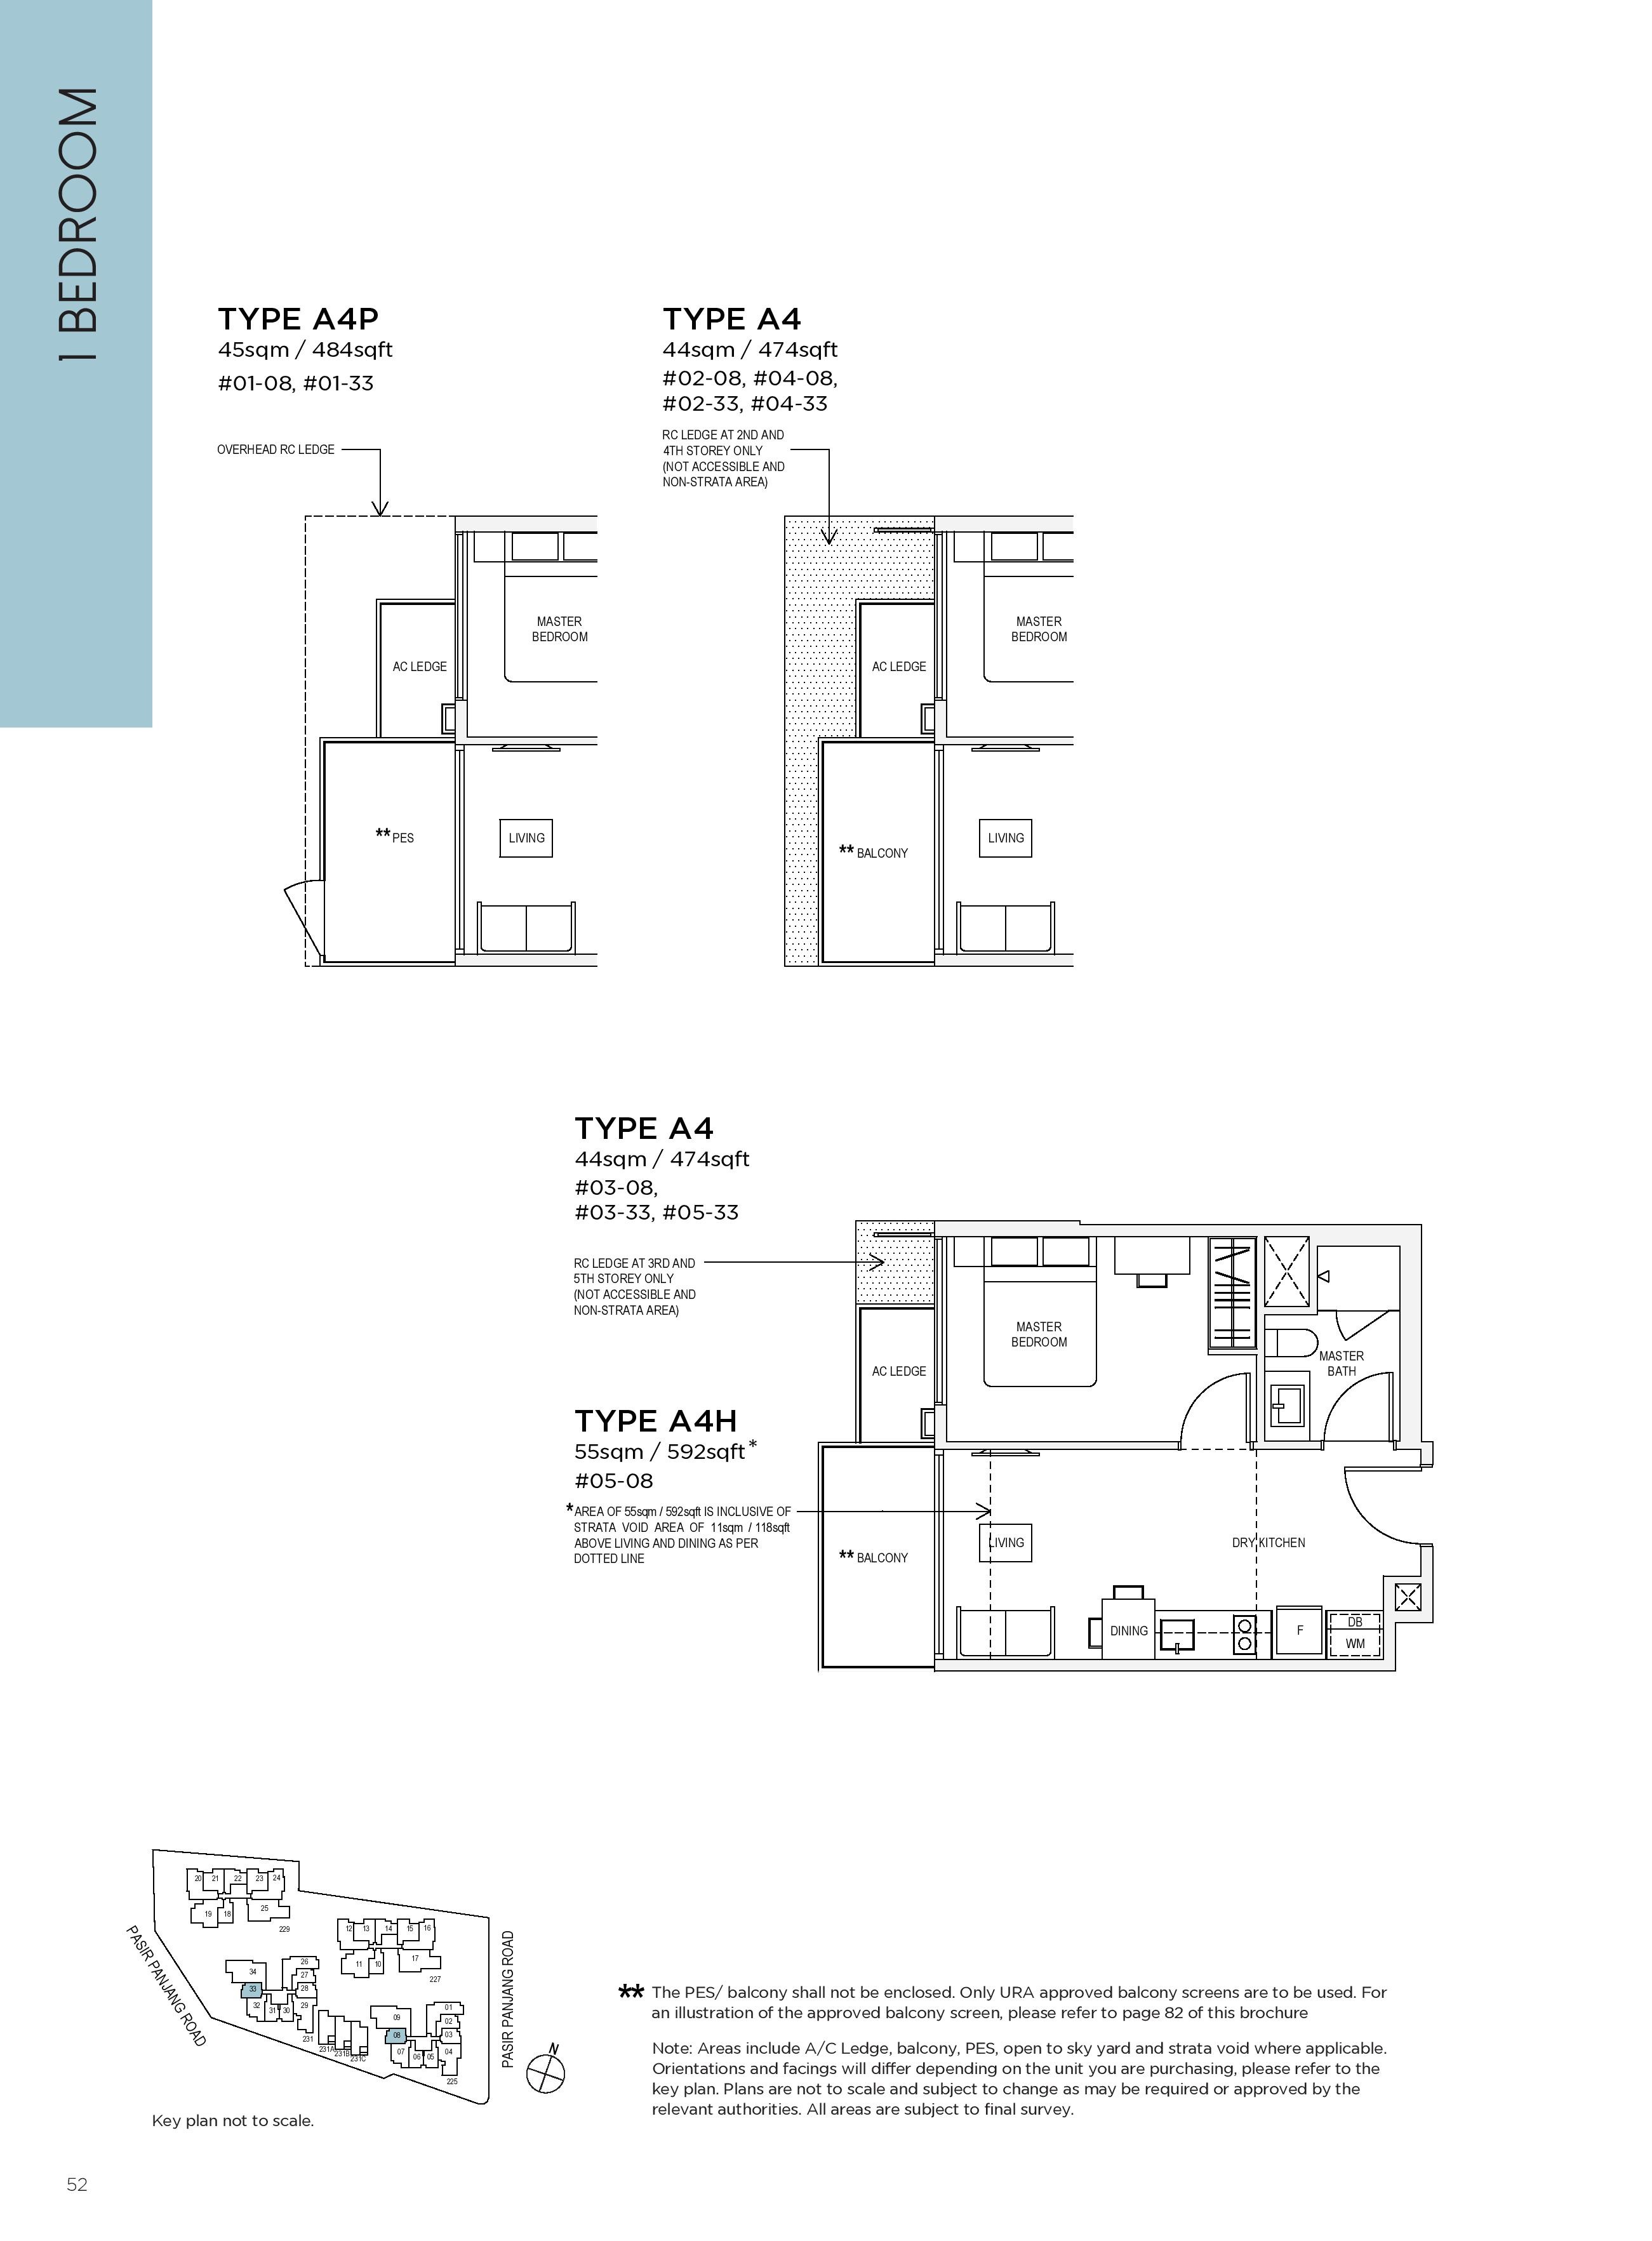 The Verandah Residences 1 Bedroom Floor Plans Type A4, A4H, A4P